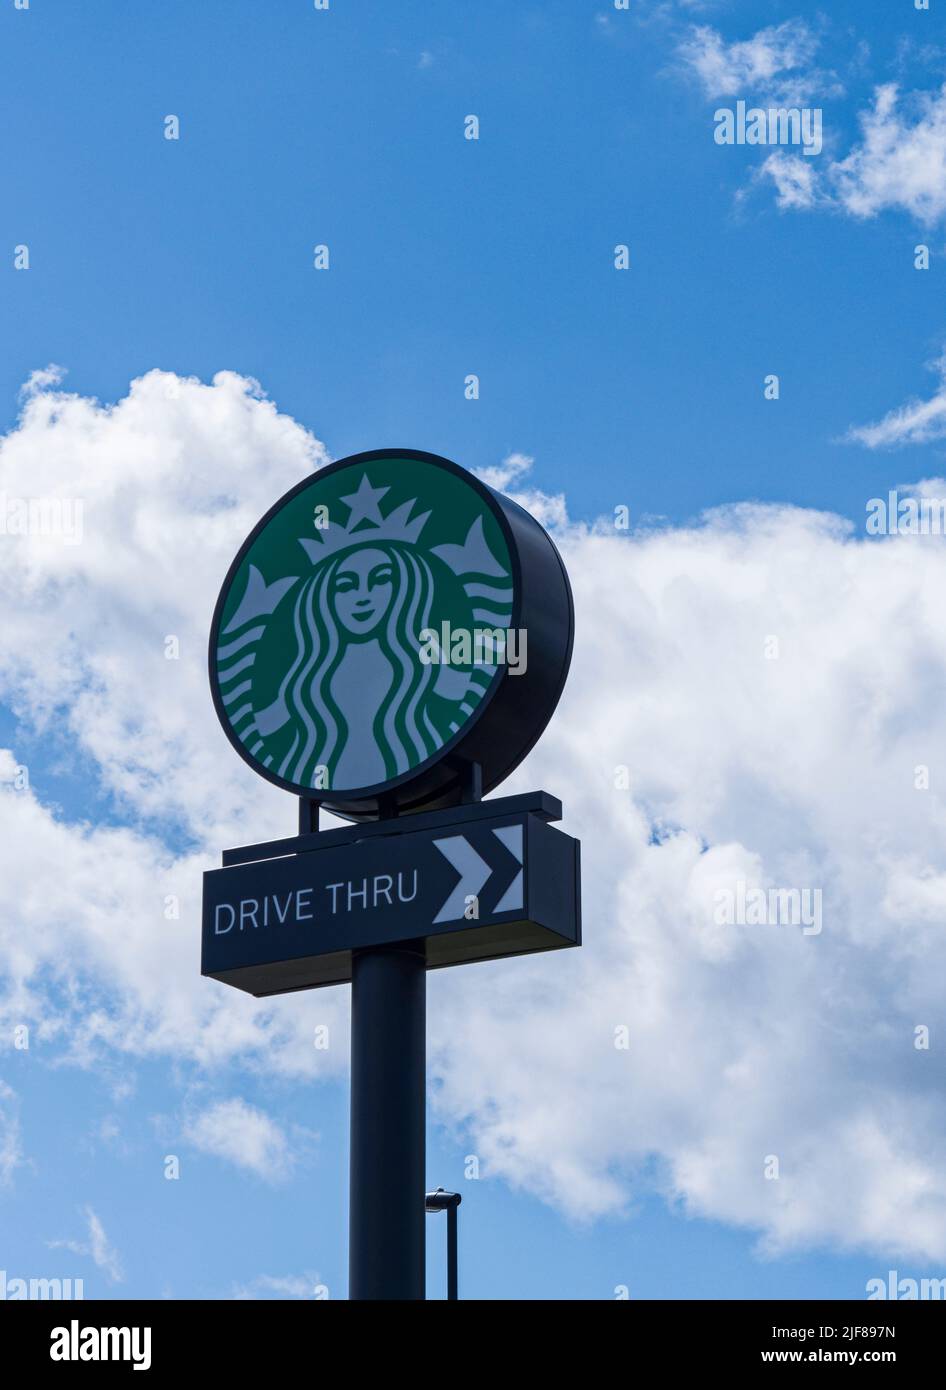 Starbucks drive thru sign with copy space, Northumberland, UK Stock Photo